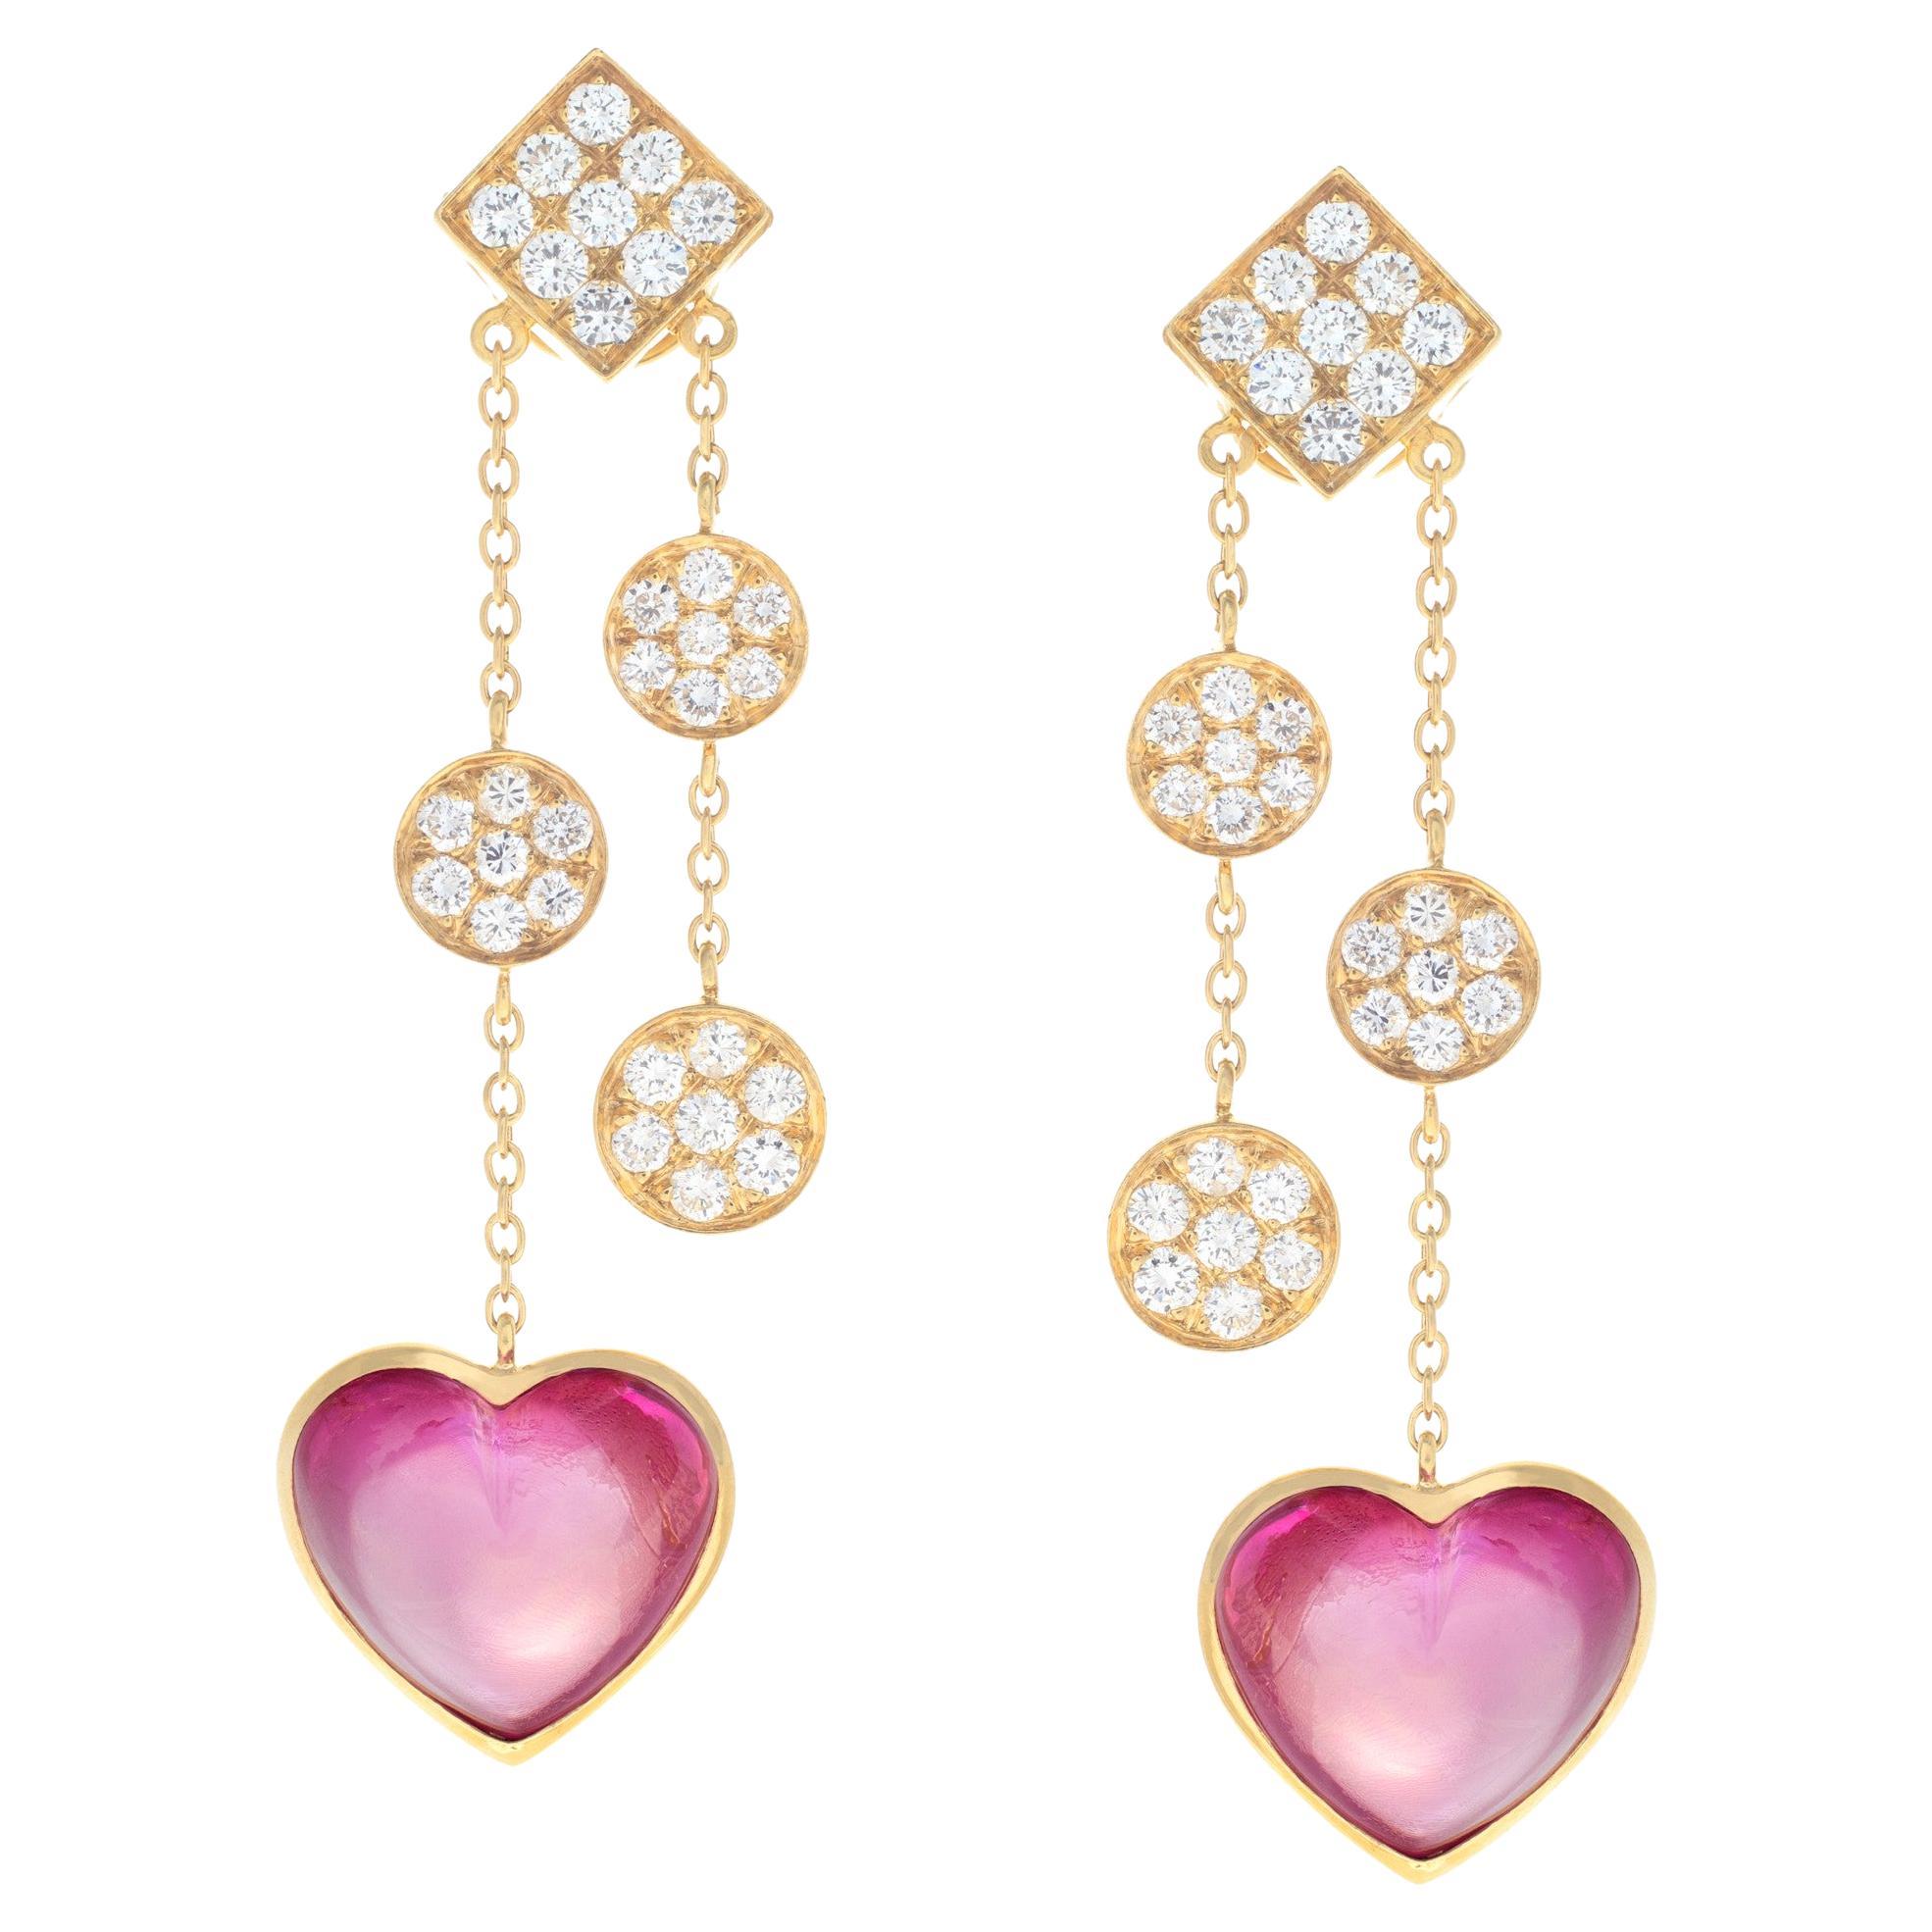 Diamond & Pink Cabochon Tourmaline Dangling Earrings Set in 18k Yellow Gold